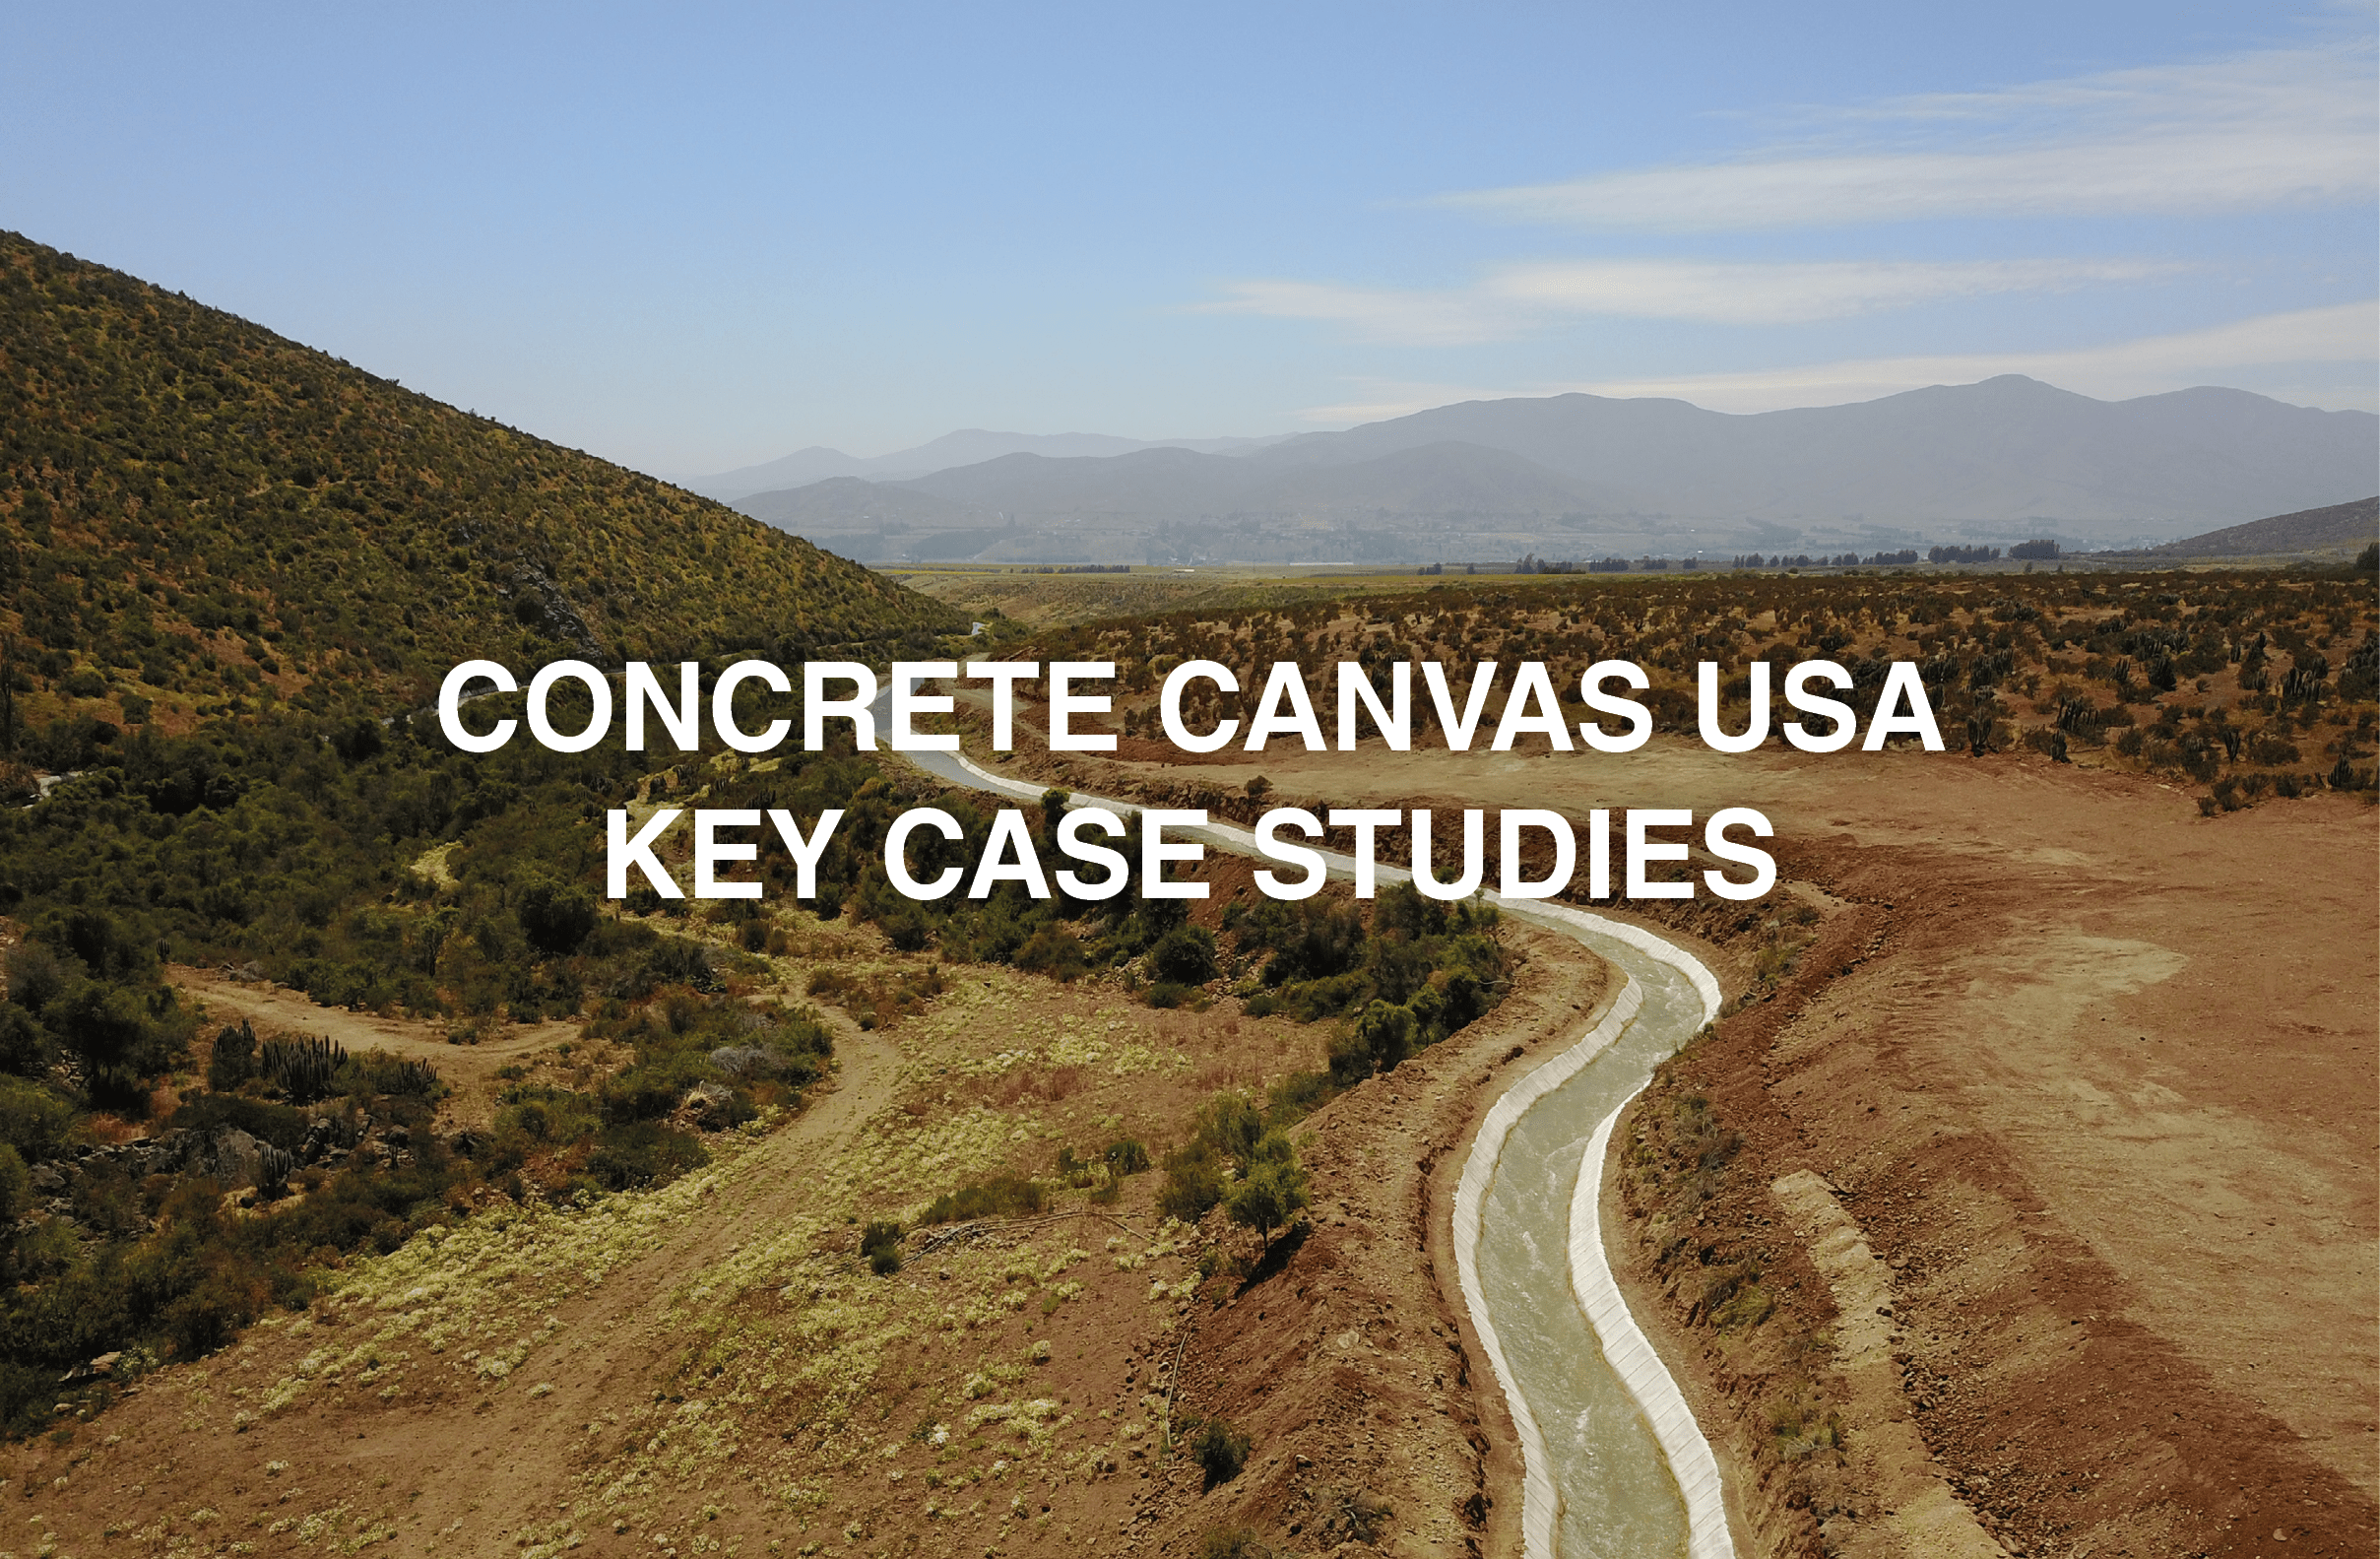 CCUSA Key Case Studies